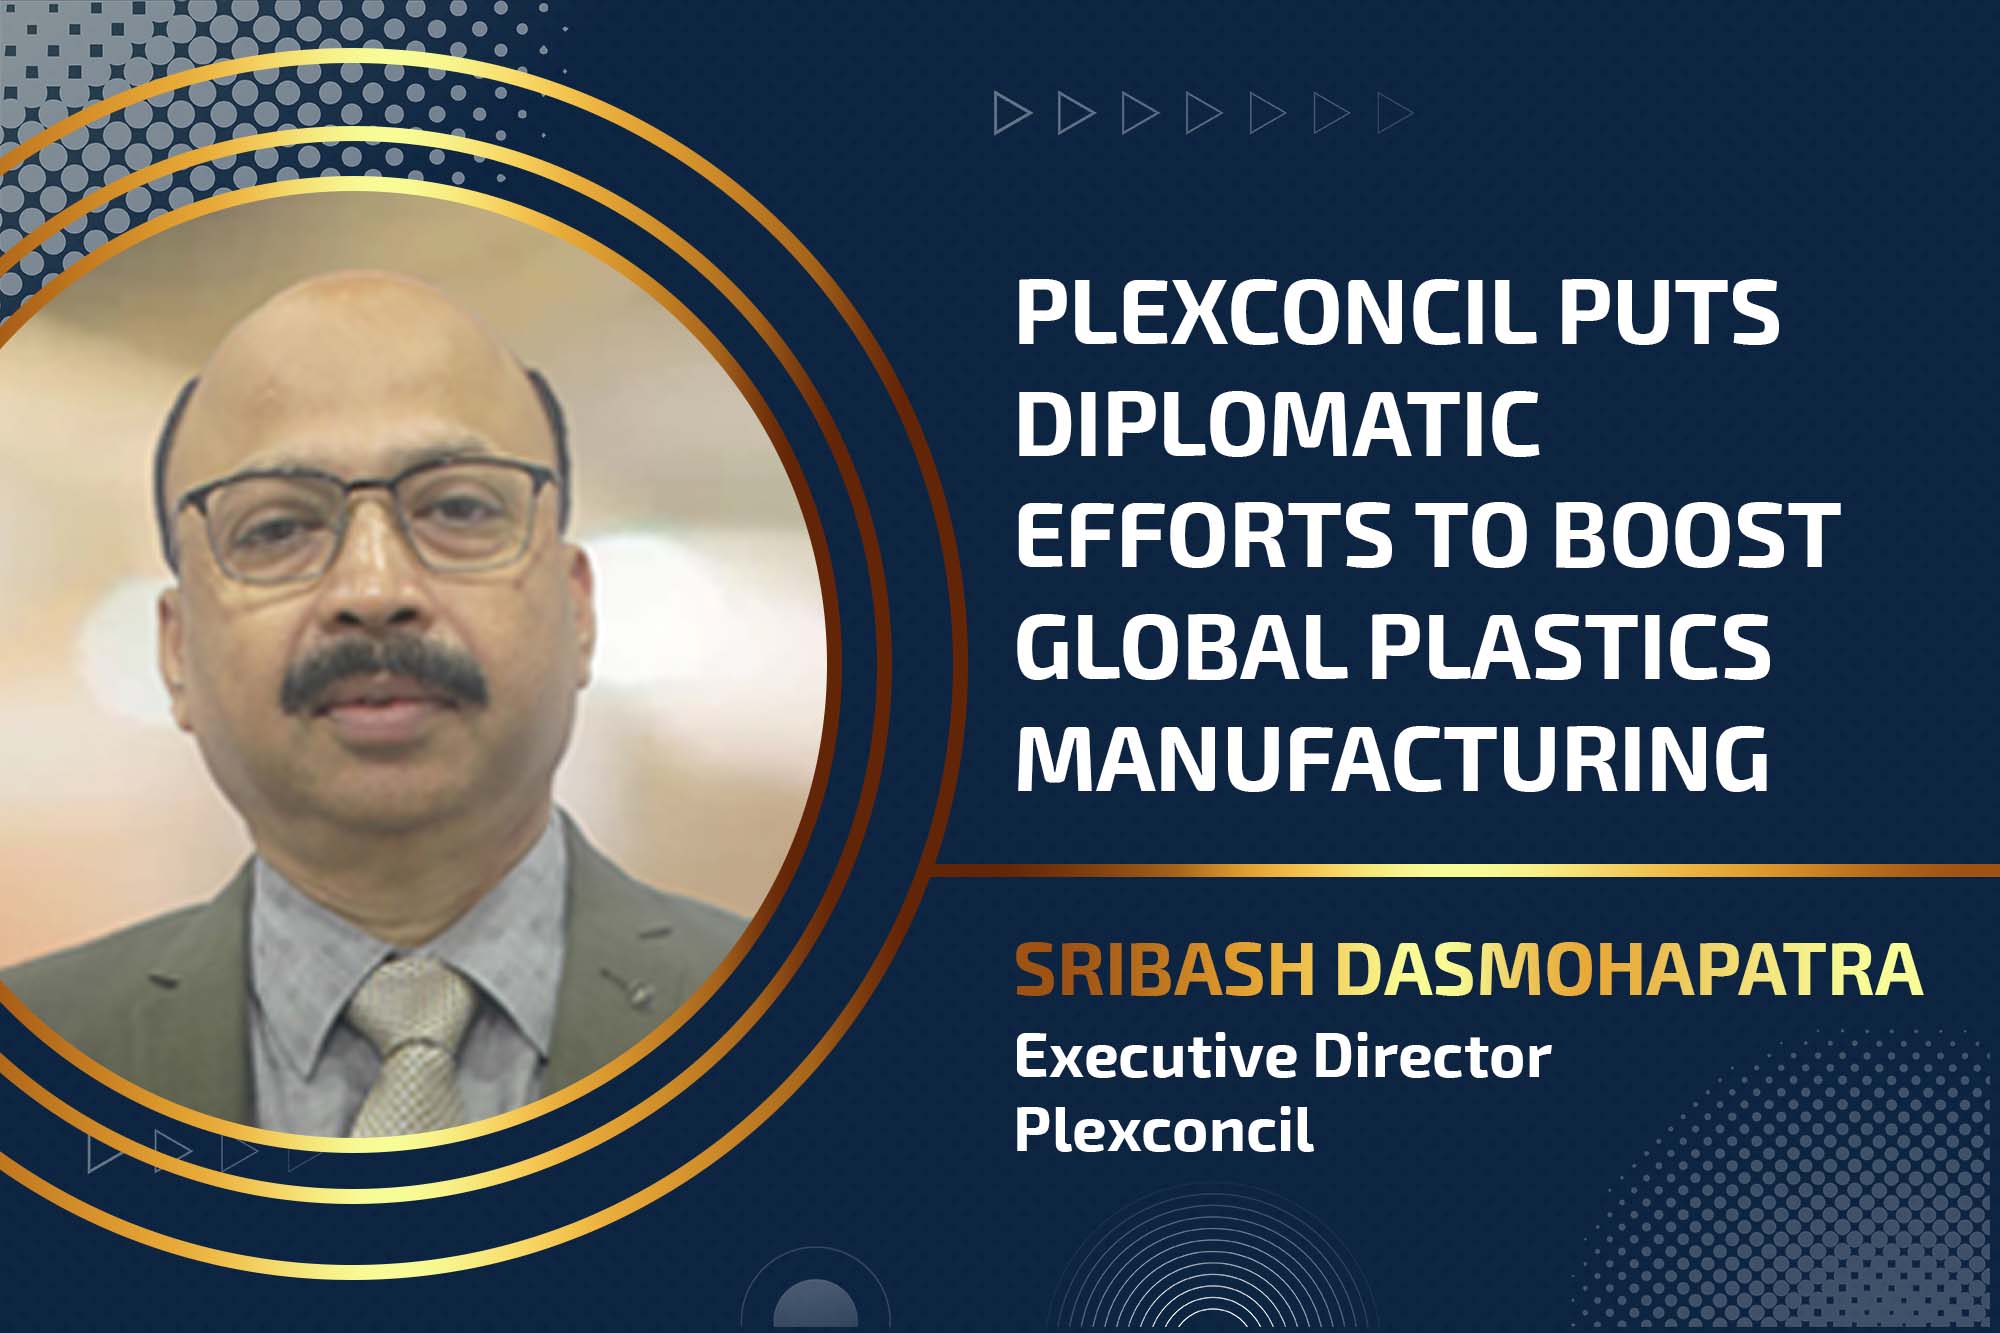 PLEXCONCIL puts diplomatic efforts to boost global plastics manufacturing